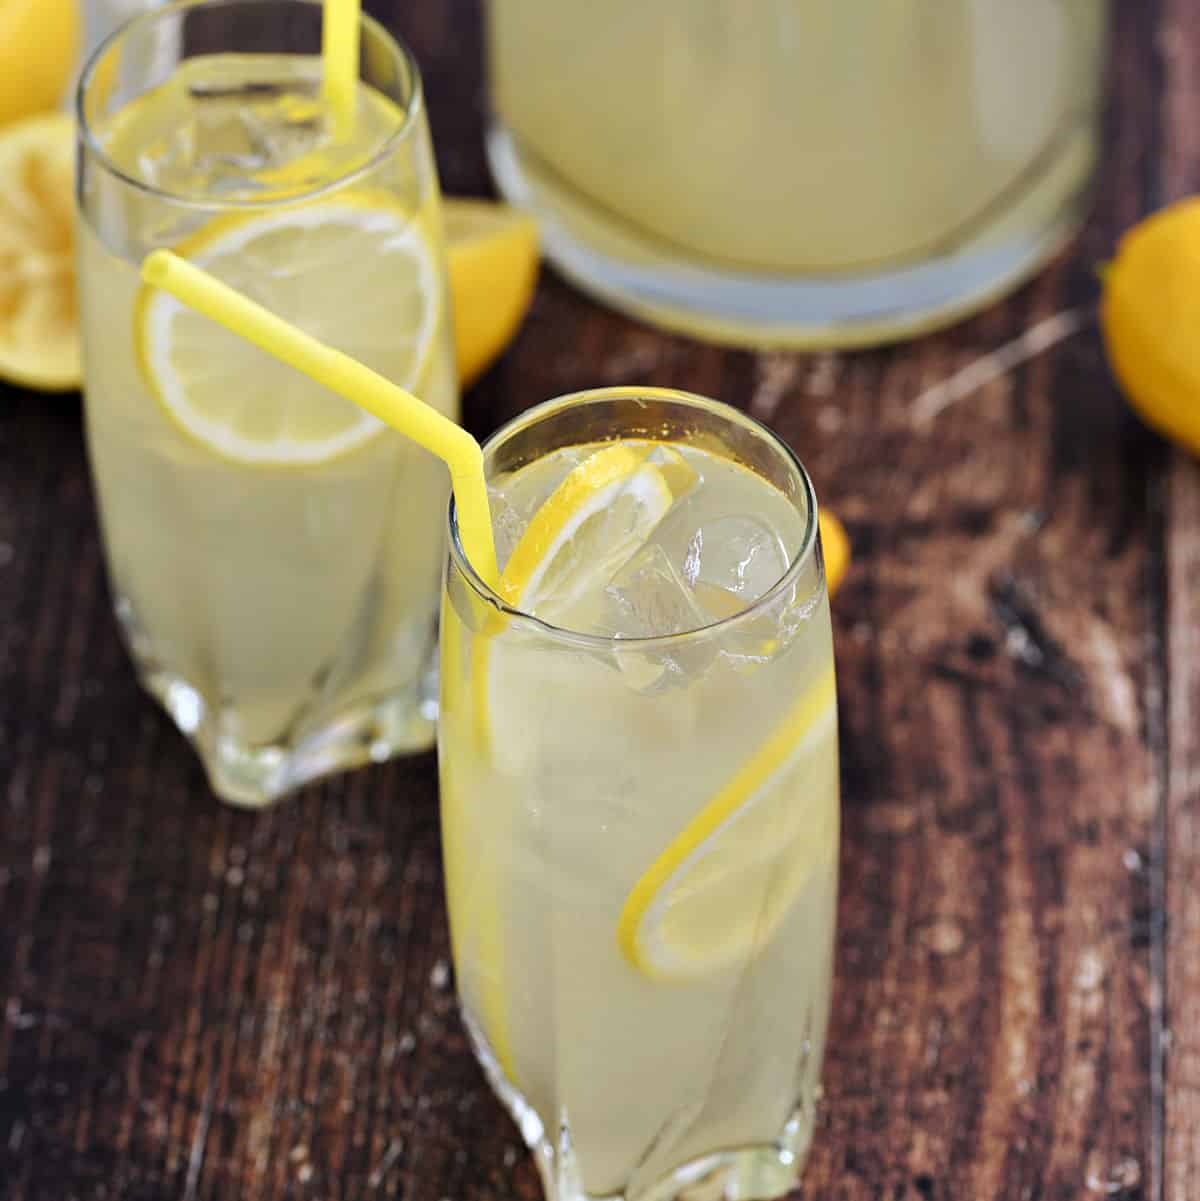 Easy Homemade Lemonade Recipe